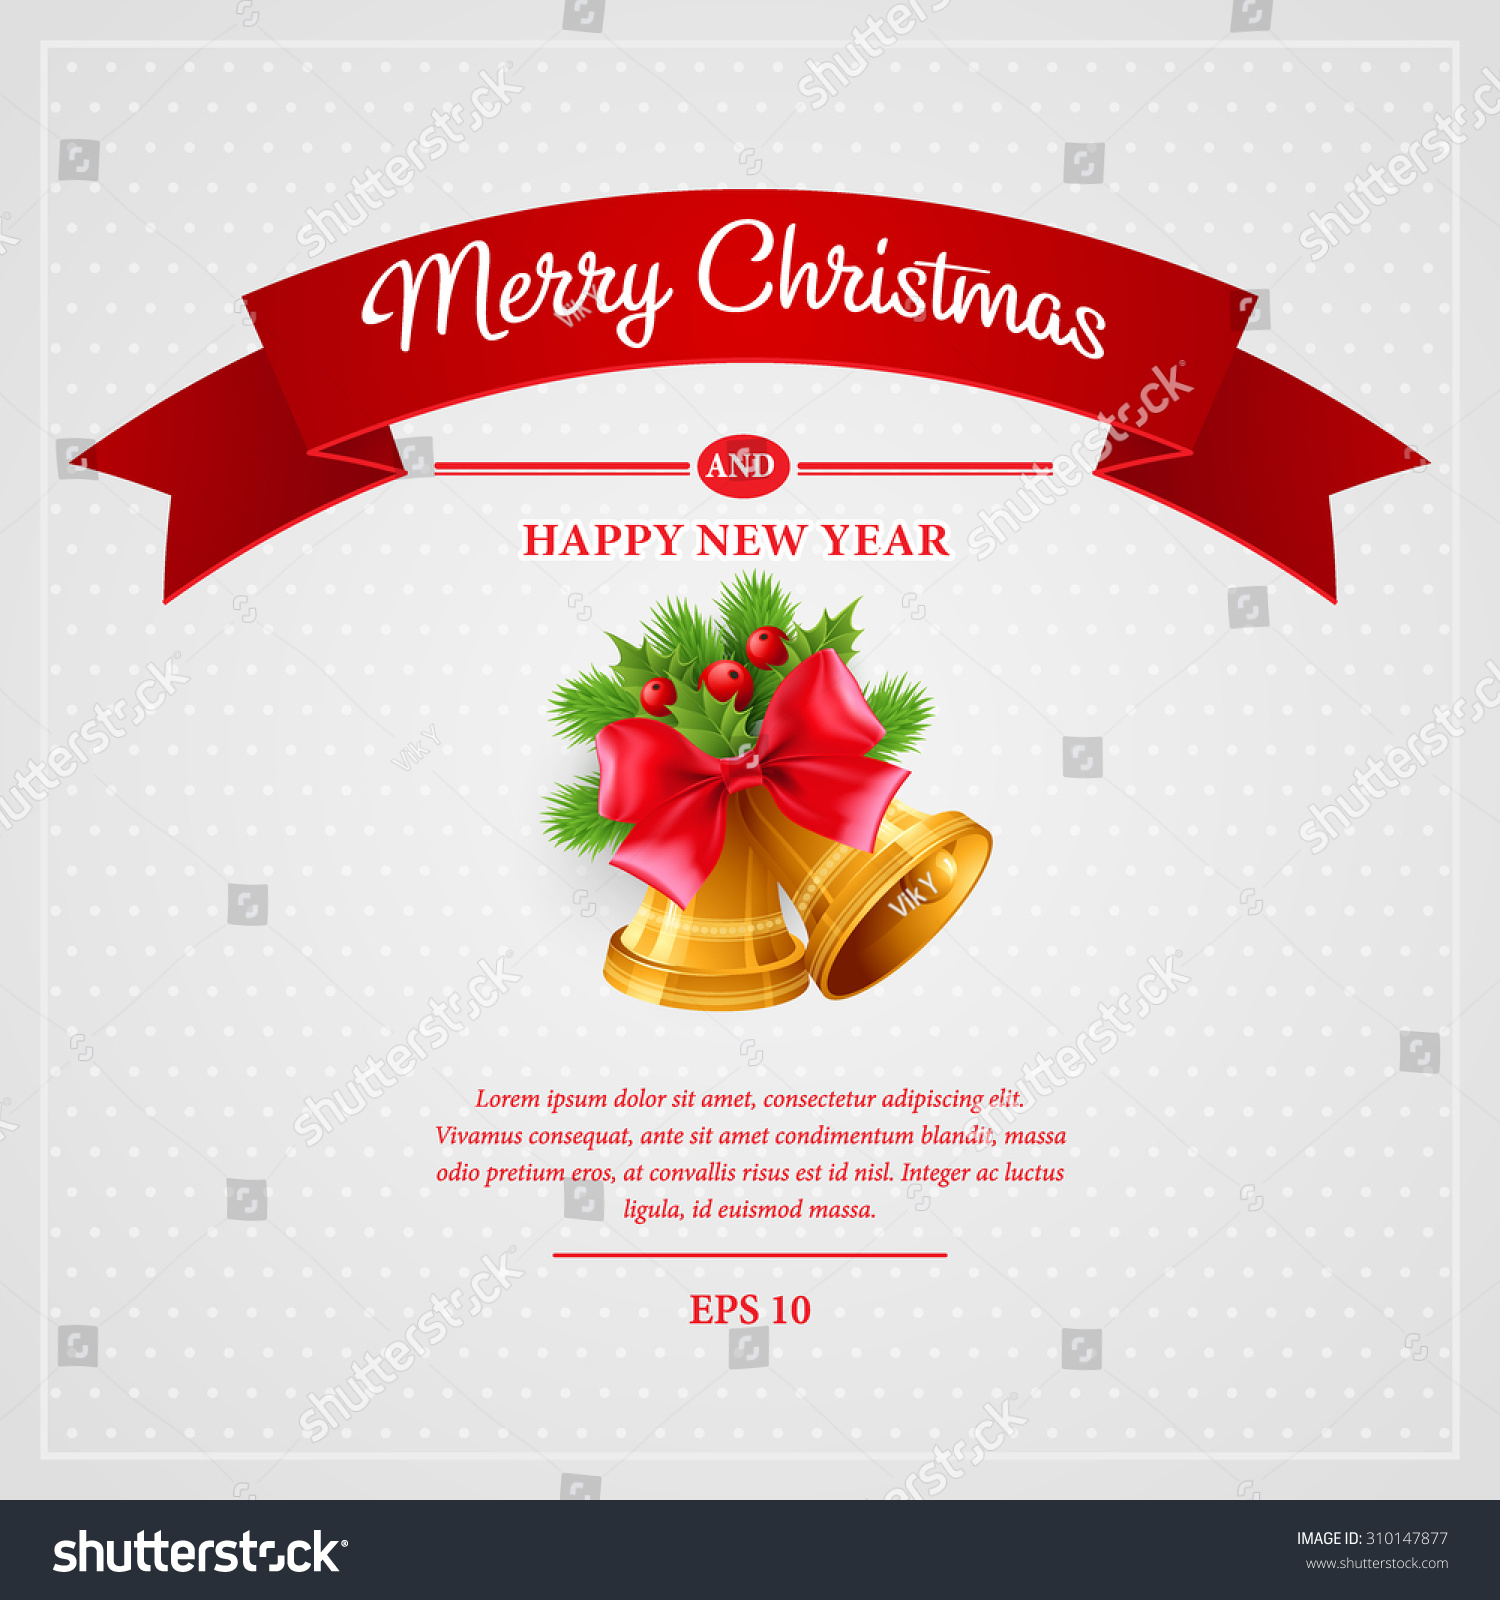 Christmas Greeting Card. Vector Illustration Eps 10 - 310147877